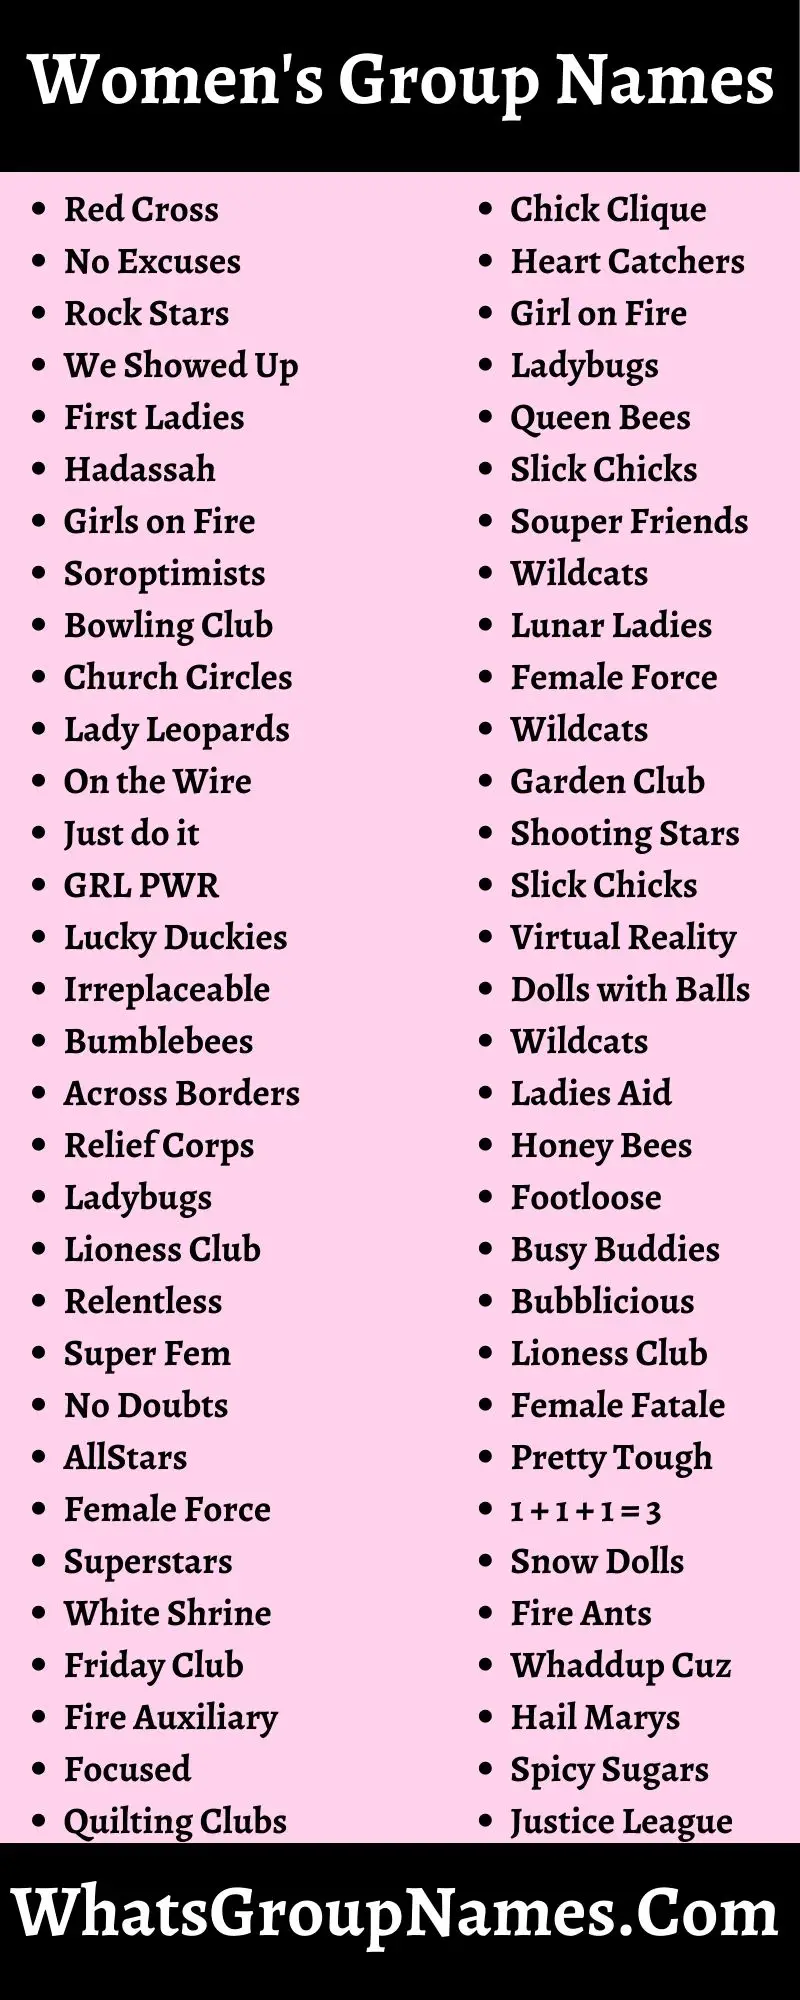 Women's Group Names